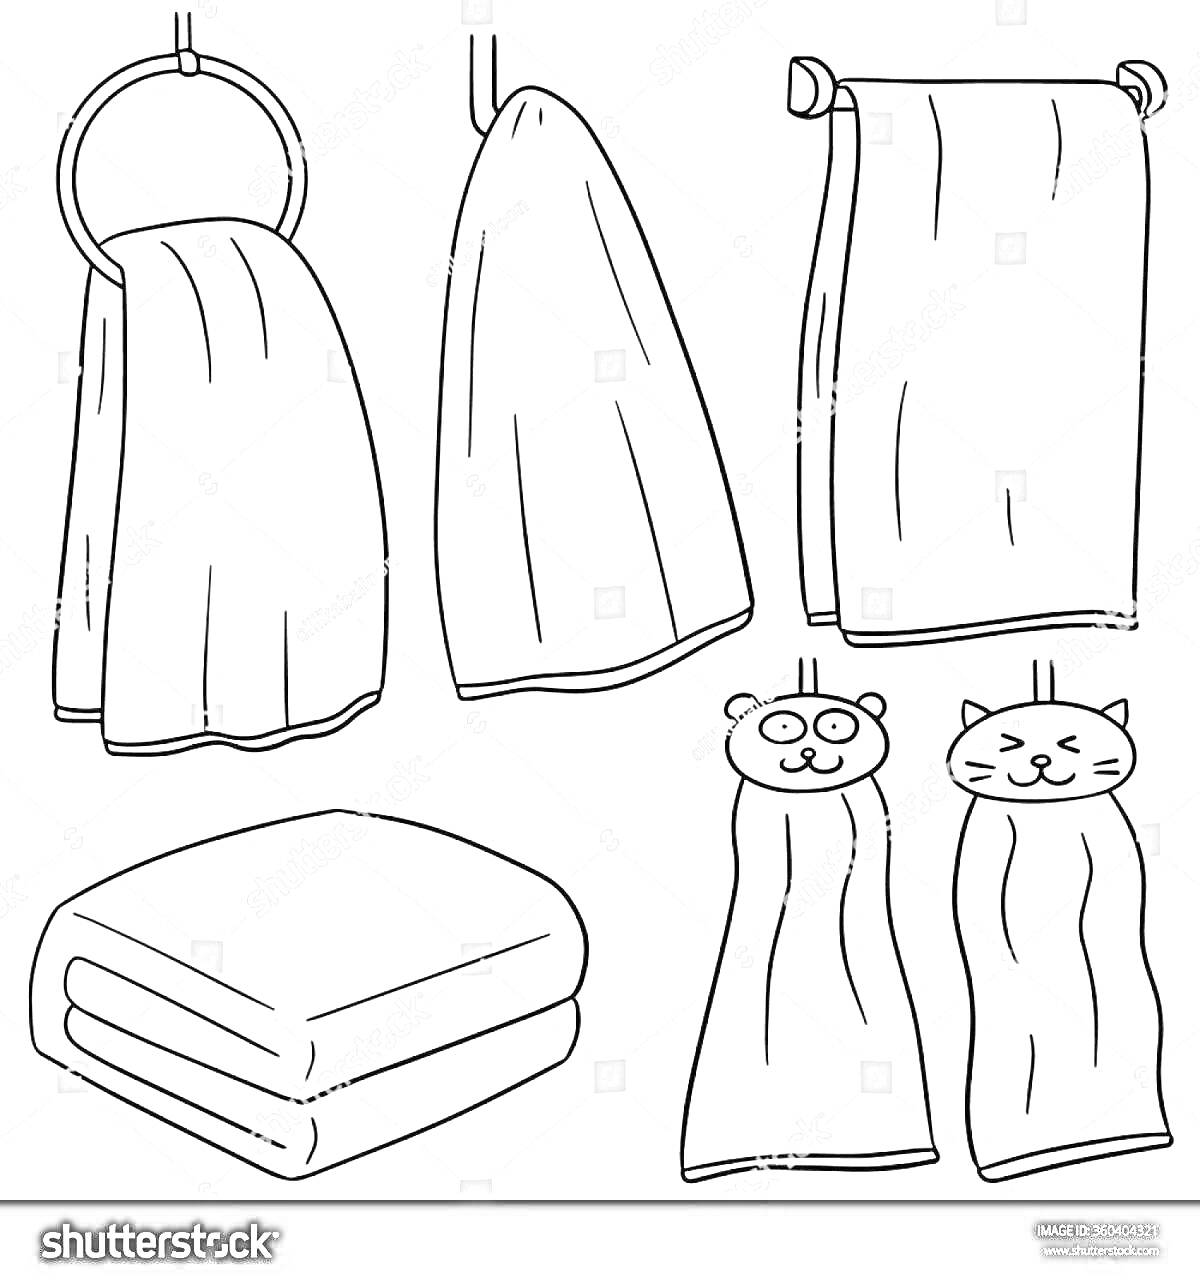 Раскраска Полотенца: полотенце в кольце, полотенце на крючке, полотенце на вешалке, сложенное полотенце, полотенца с медведем и кошкой